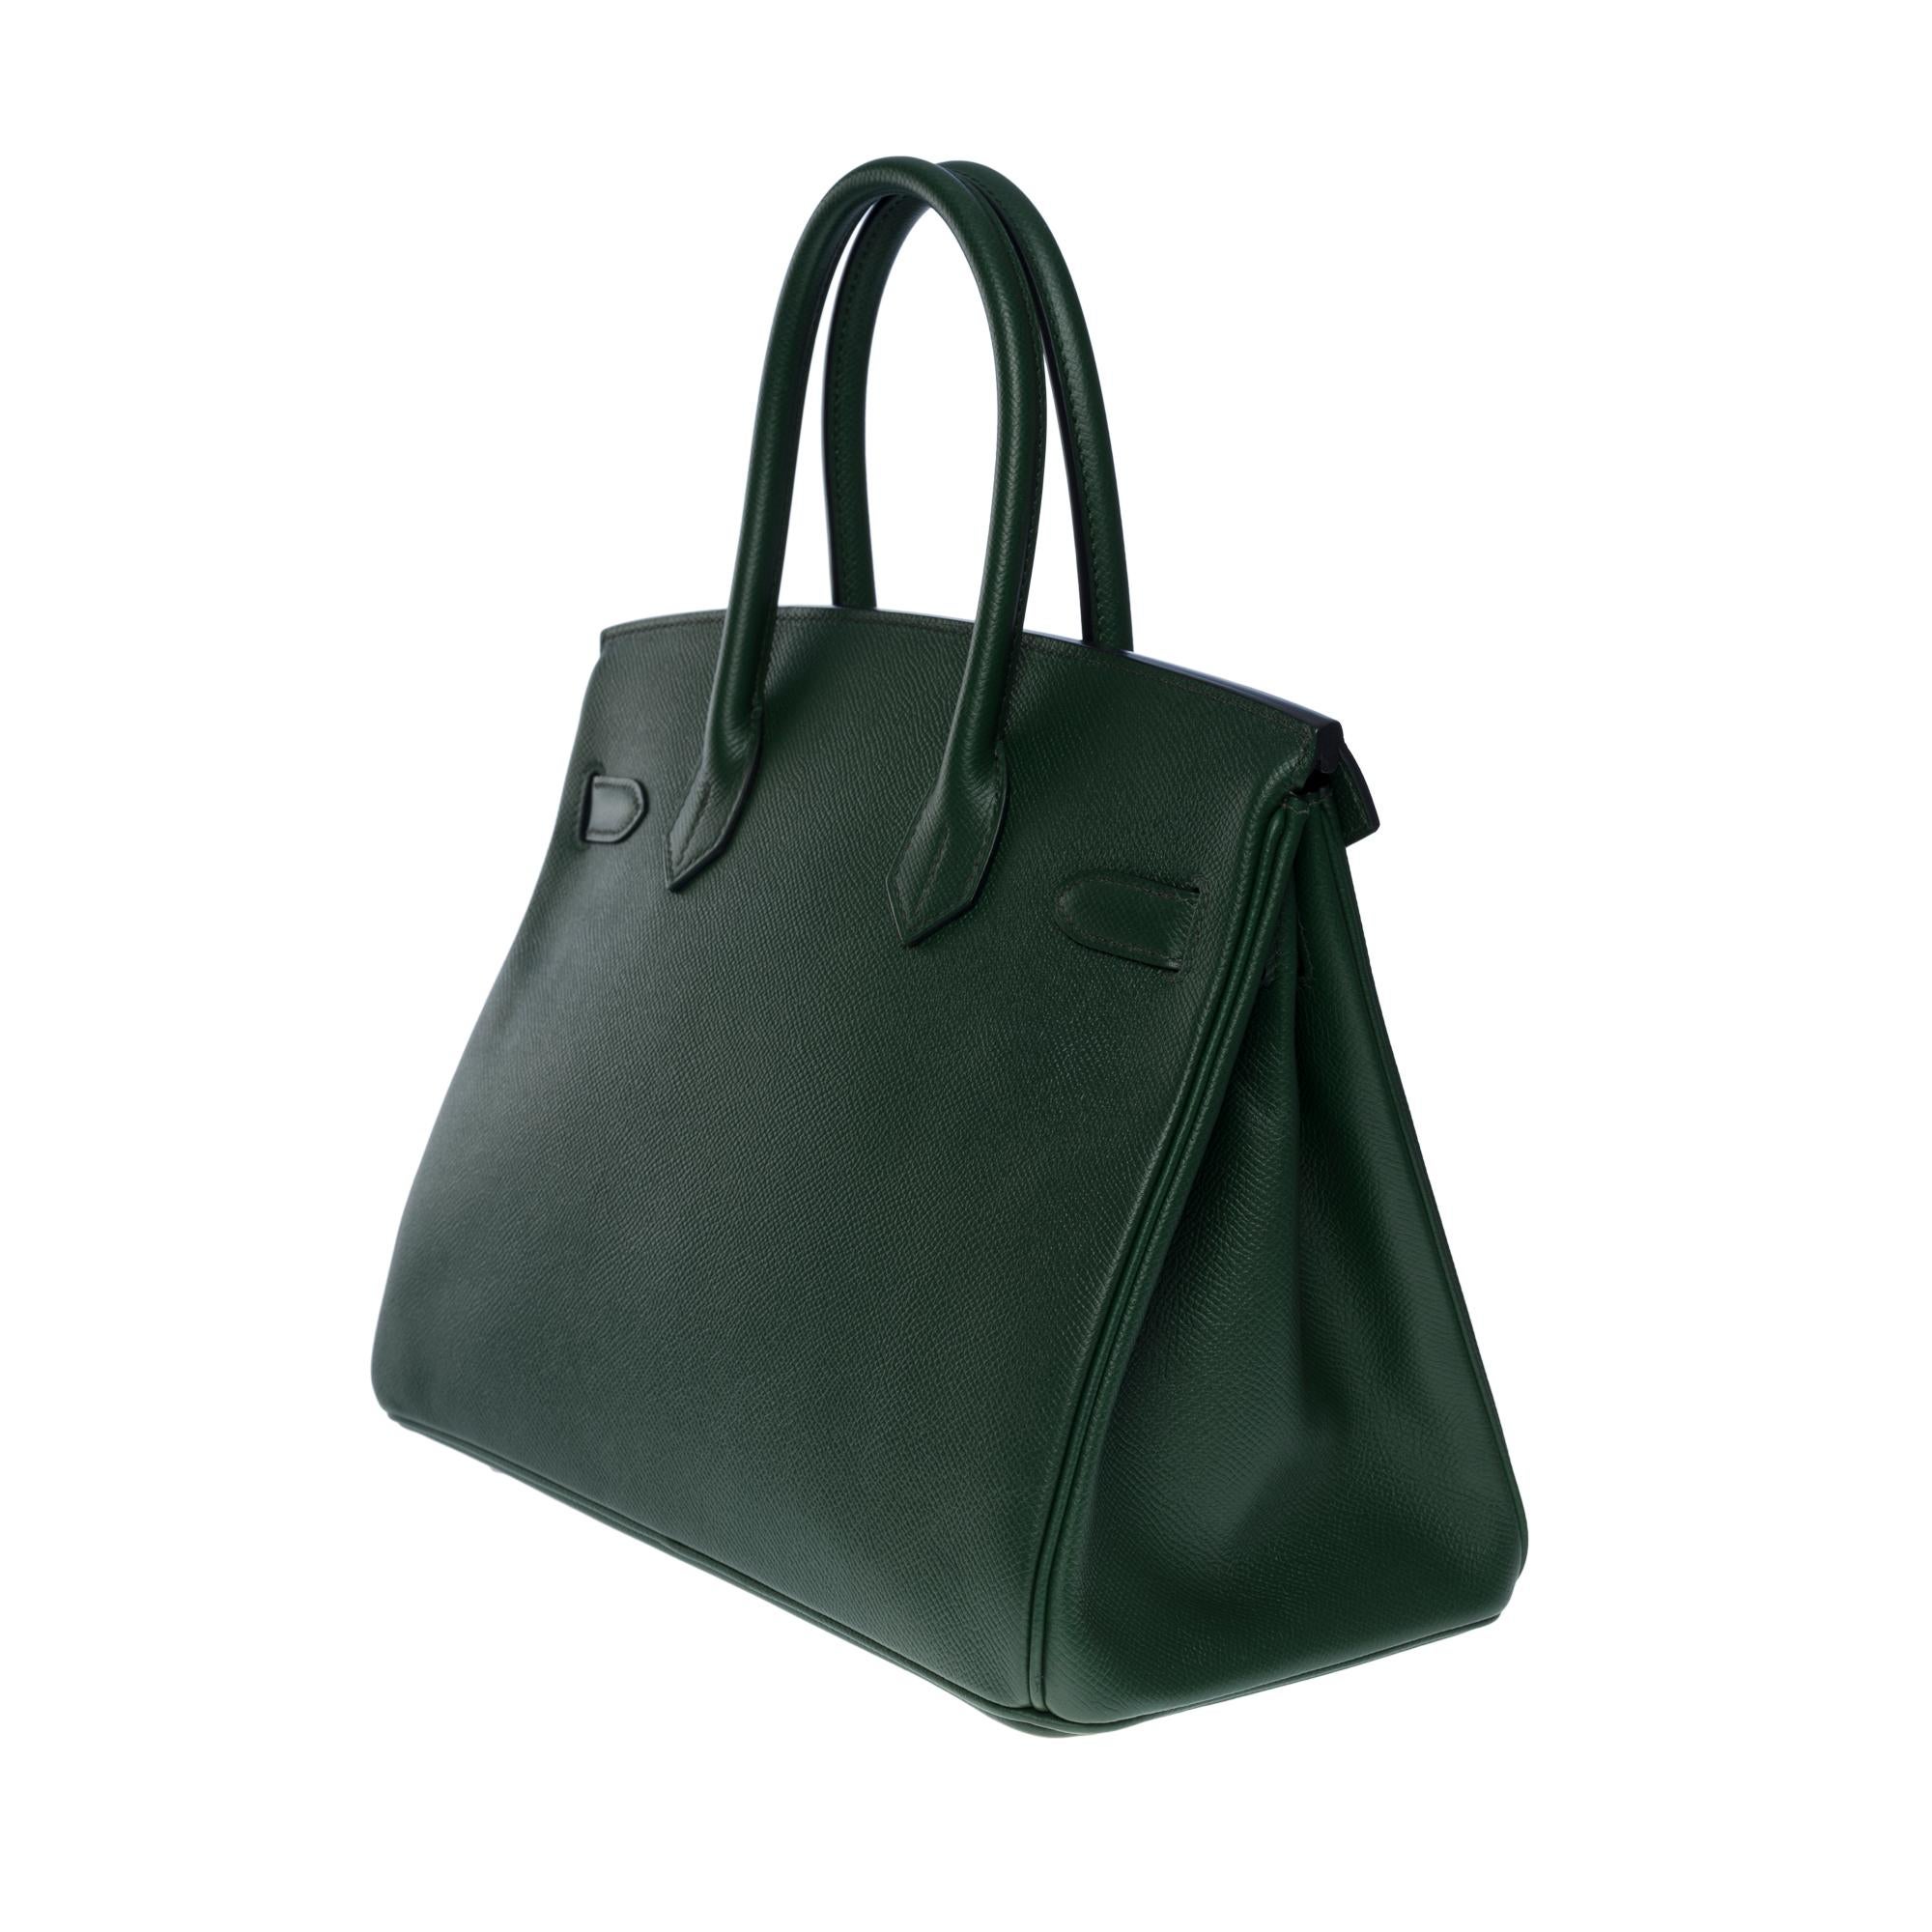 Women's Amazing & Rare Hermès Birkin 30 handbag in Vert Anglais Epsom leather, SHW